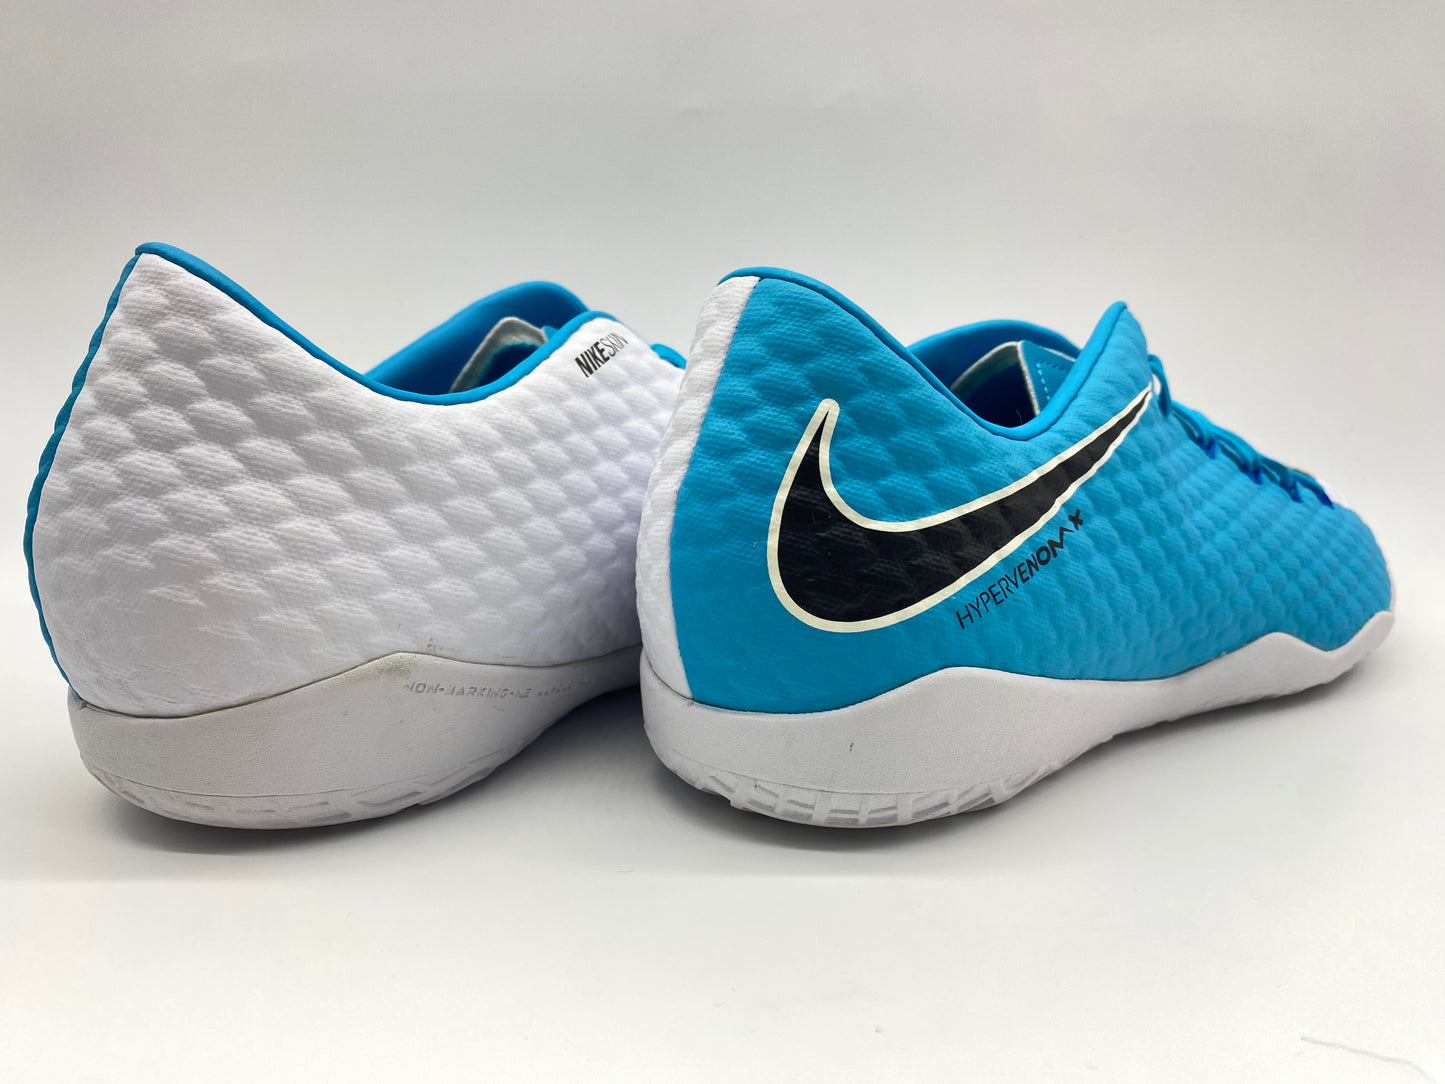 Nike Hypervenom Phelon III IC White Blue Futsal